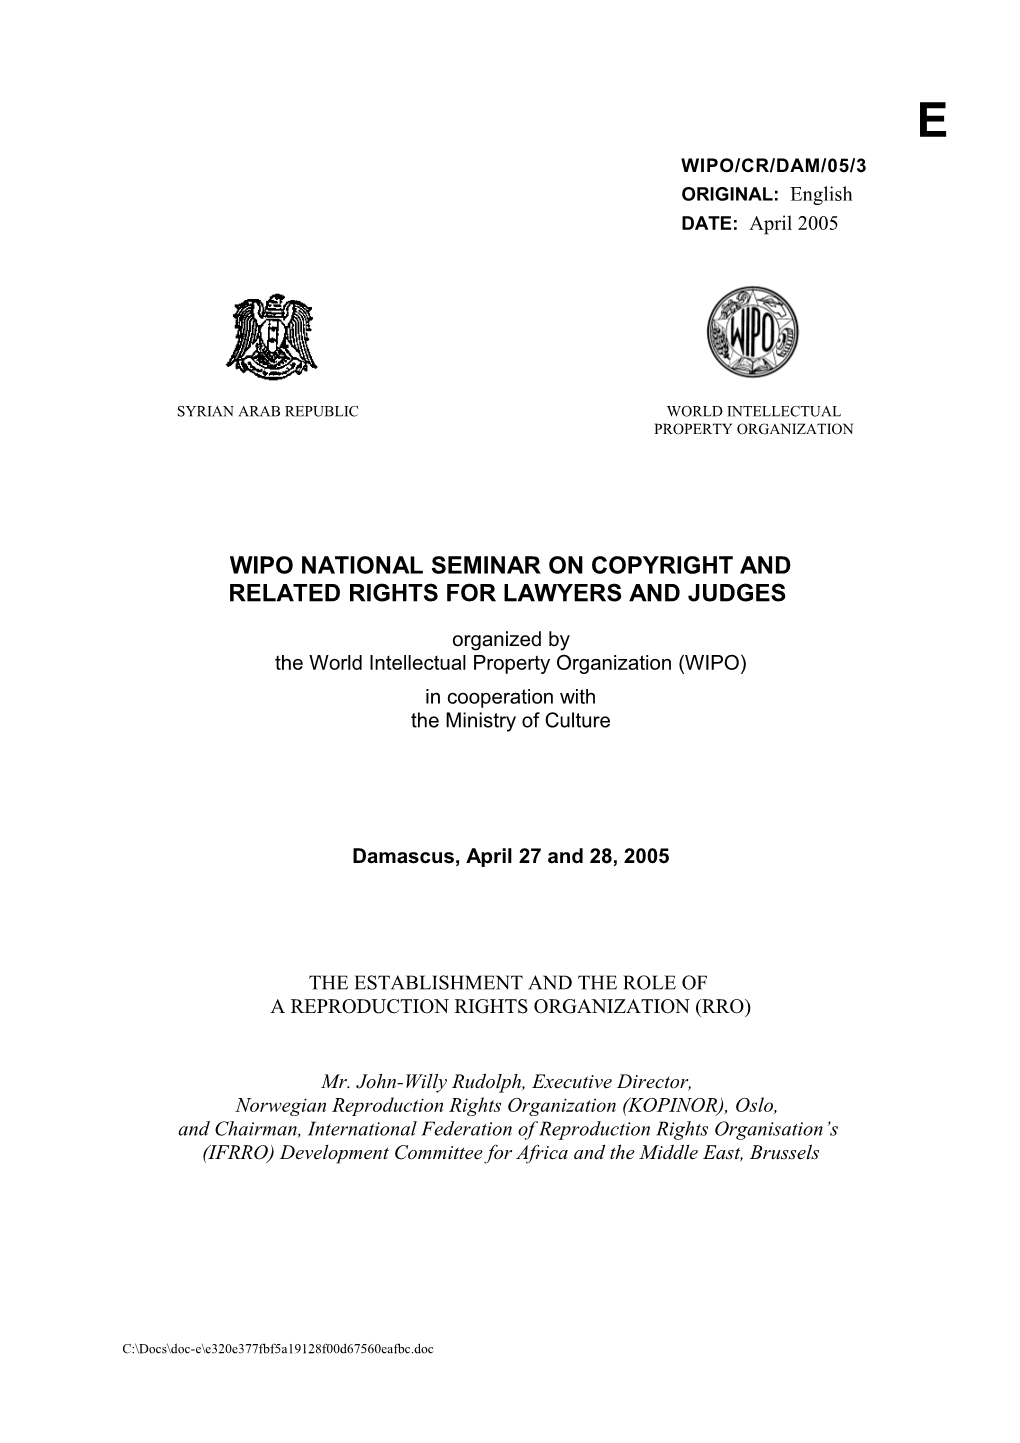 WIPO/CR/DAM/05/3: the Establishment and the Role of a Reproduction Rights Organization (RRO S)